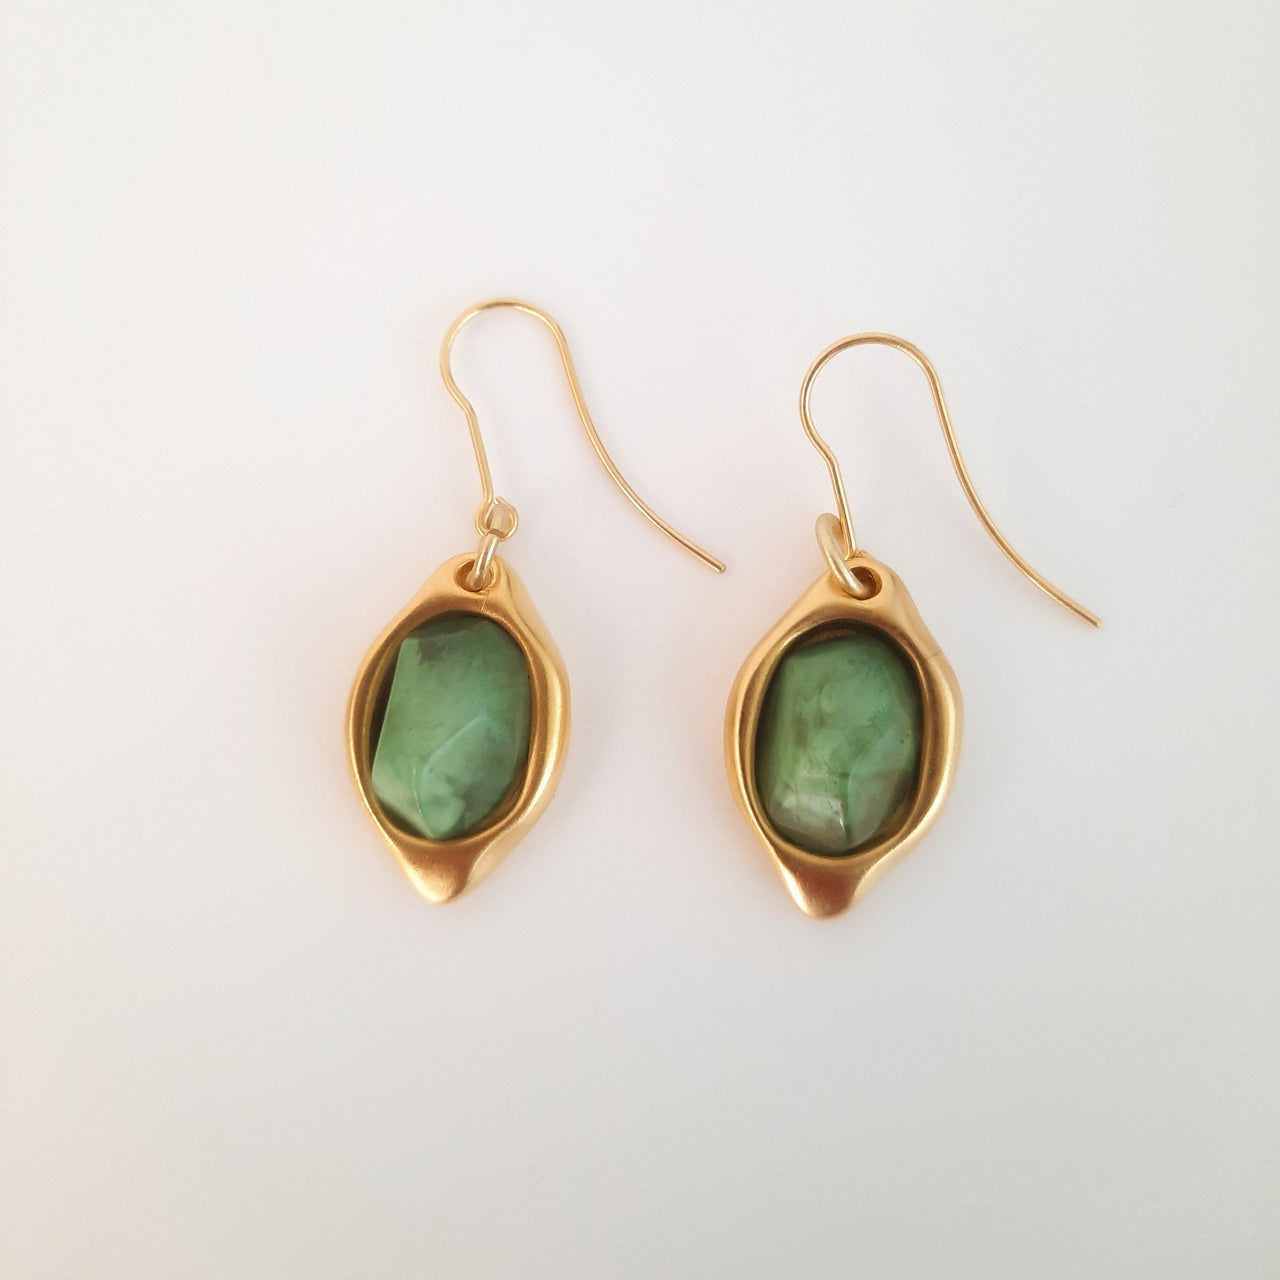 Vergoldete Ohrringe mit grünem Edelstein - Julia Ohrringe KOOMPLIMENTS